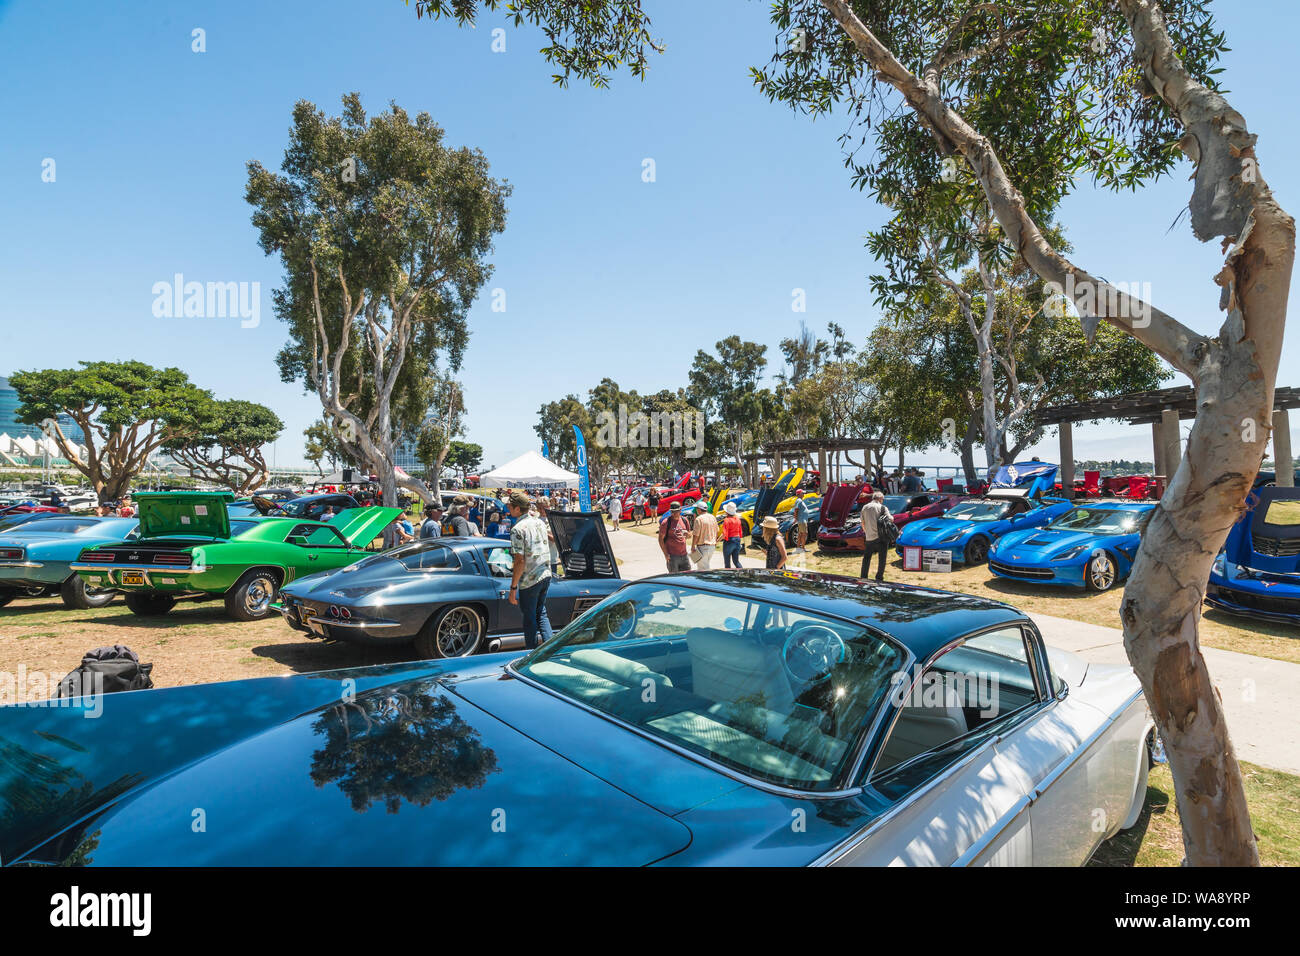 San Diego/USA - August 11, 2019 Main Street America Corvette Car Show in Marina Park North - Seaport Village in San Diego, California Stock Photo